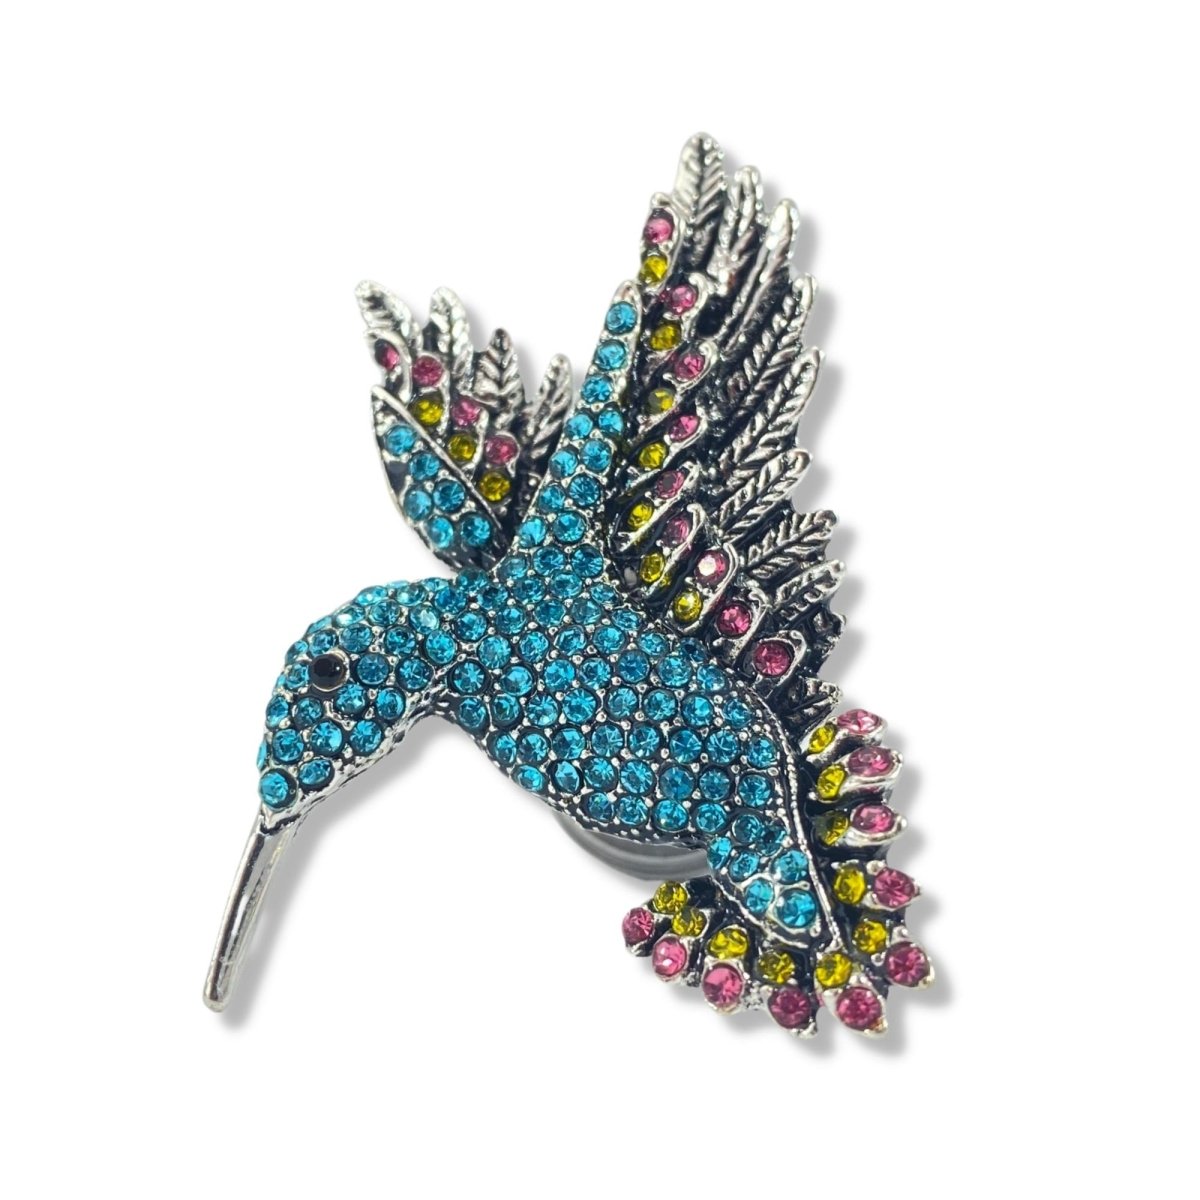 Hummingbird Drawer Knob with Blue Crystals - DaRosa Creations